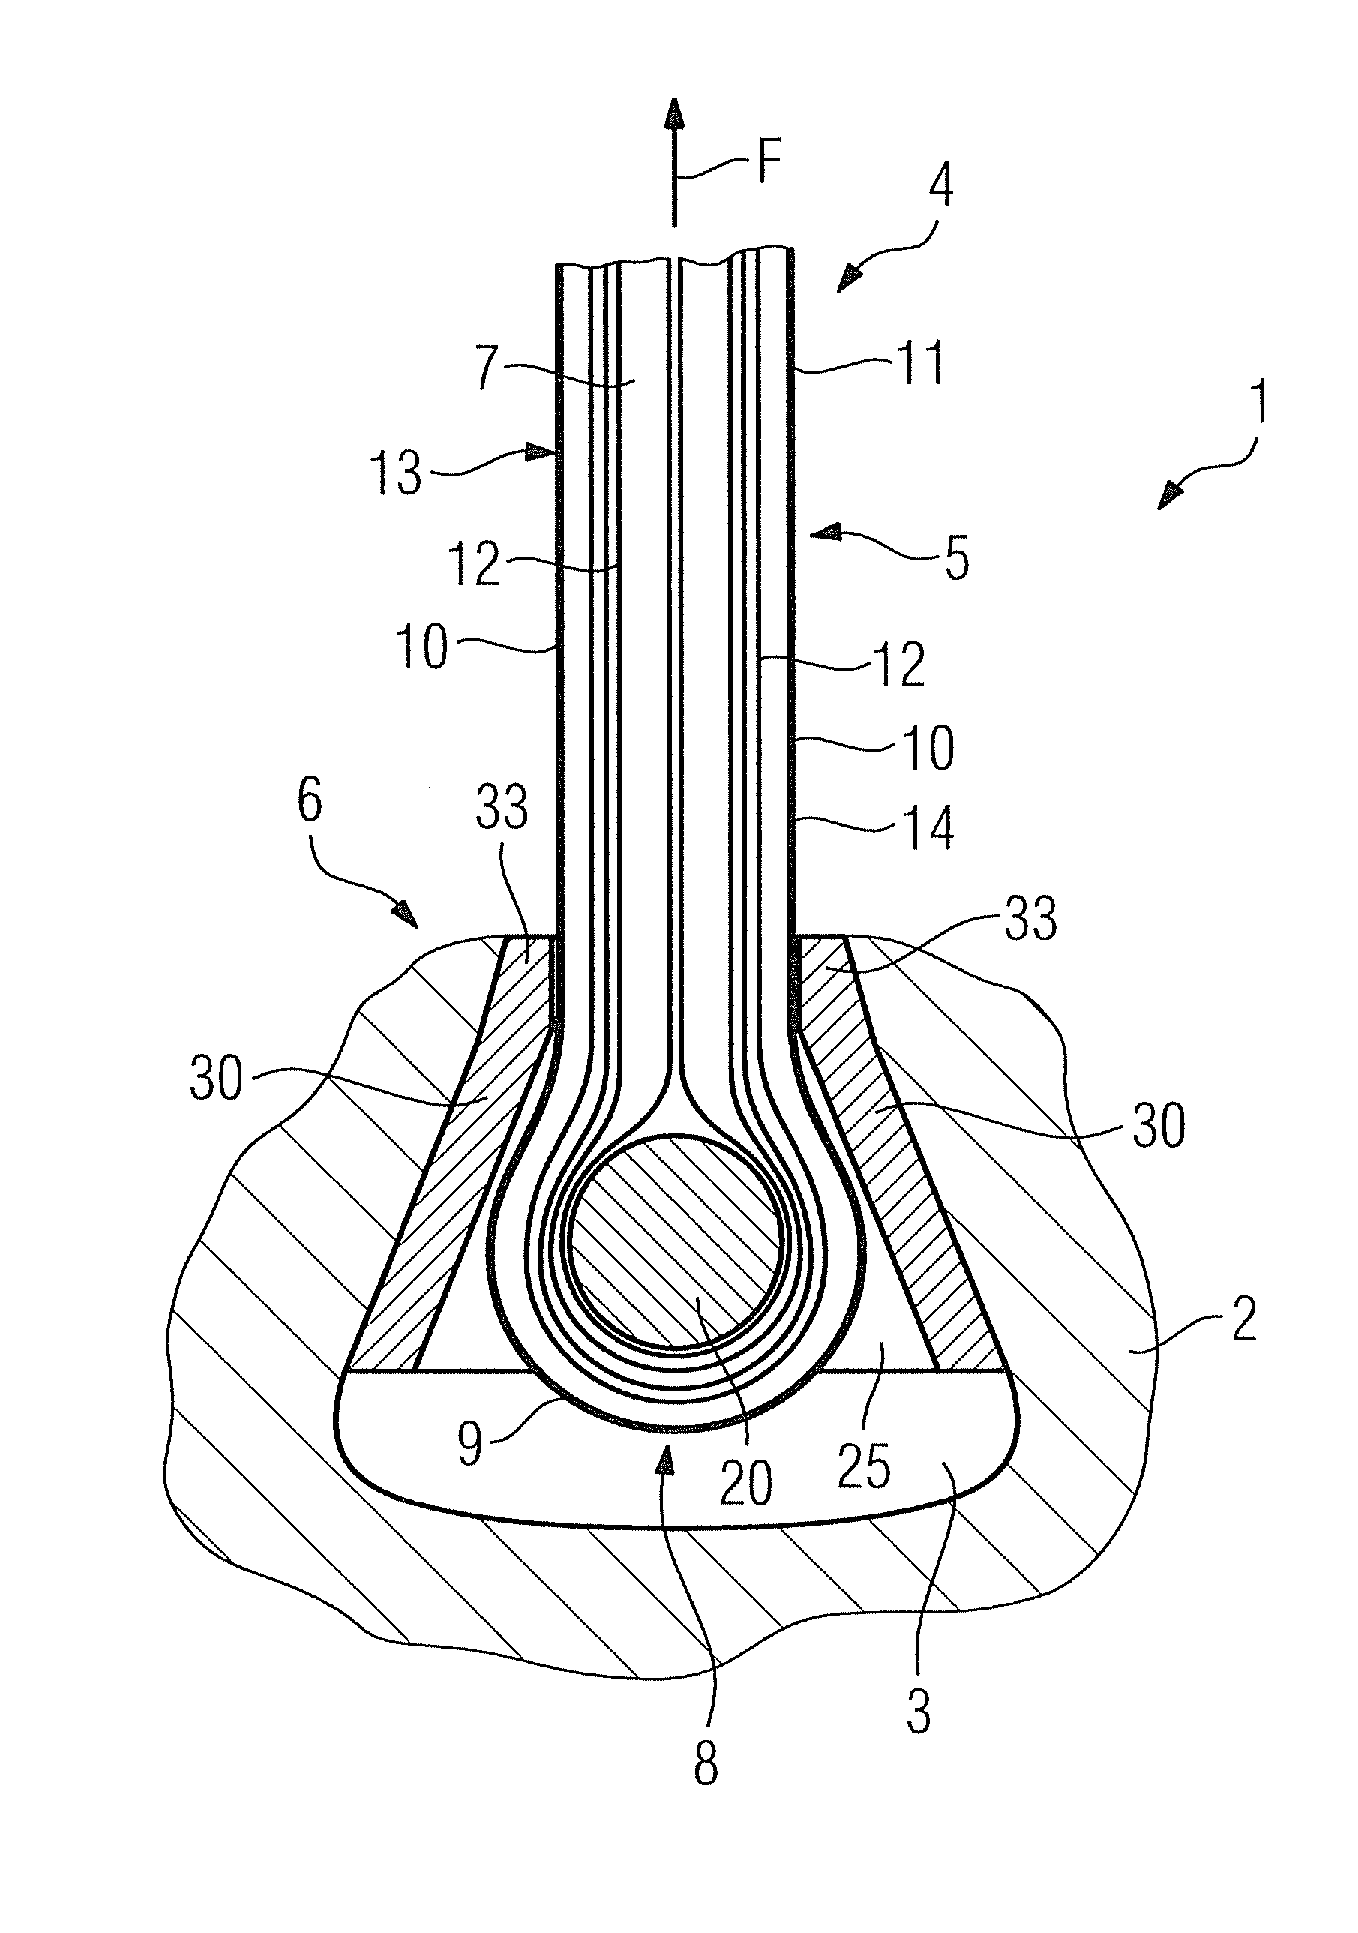 Turbine or compressor blade